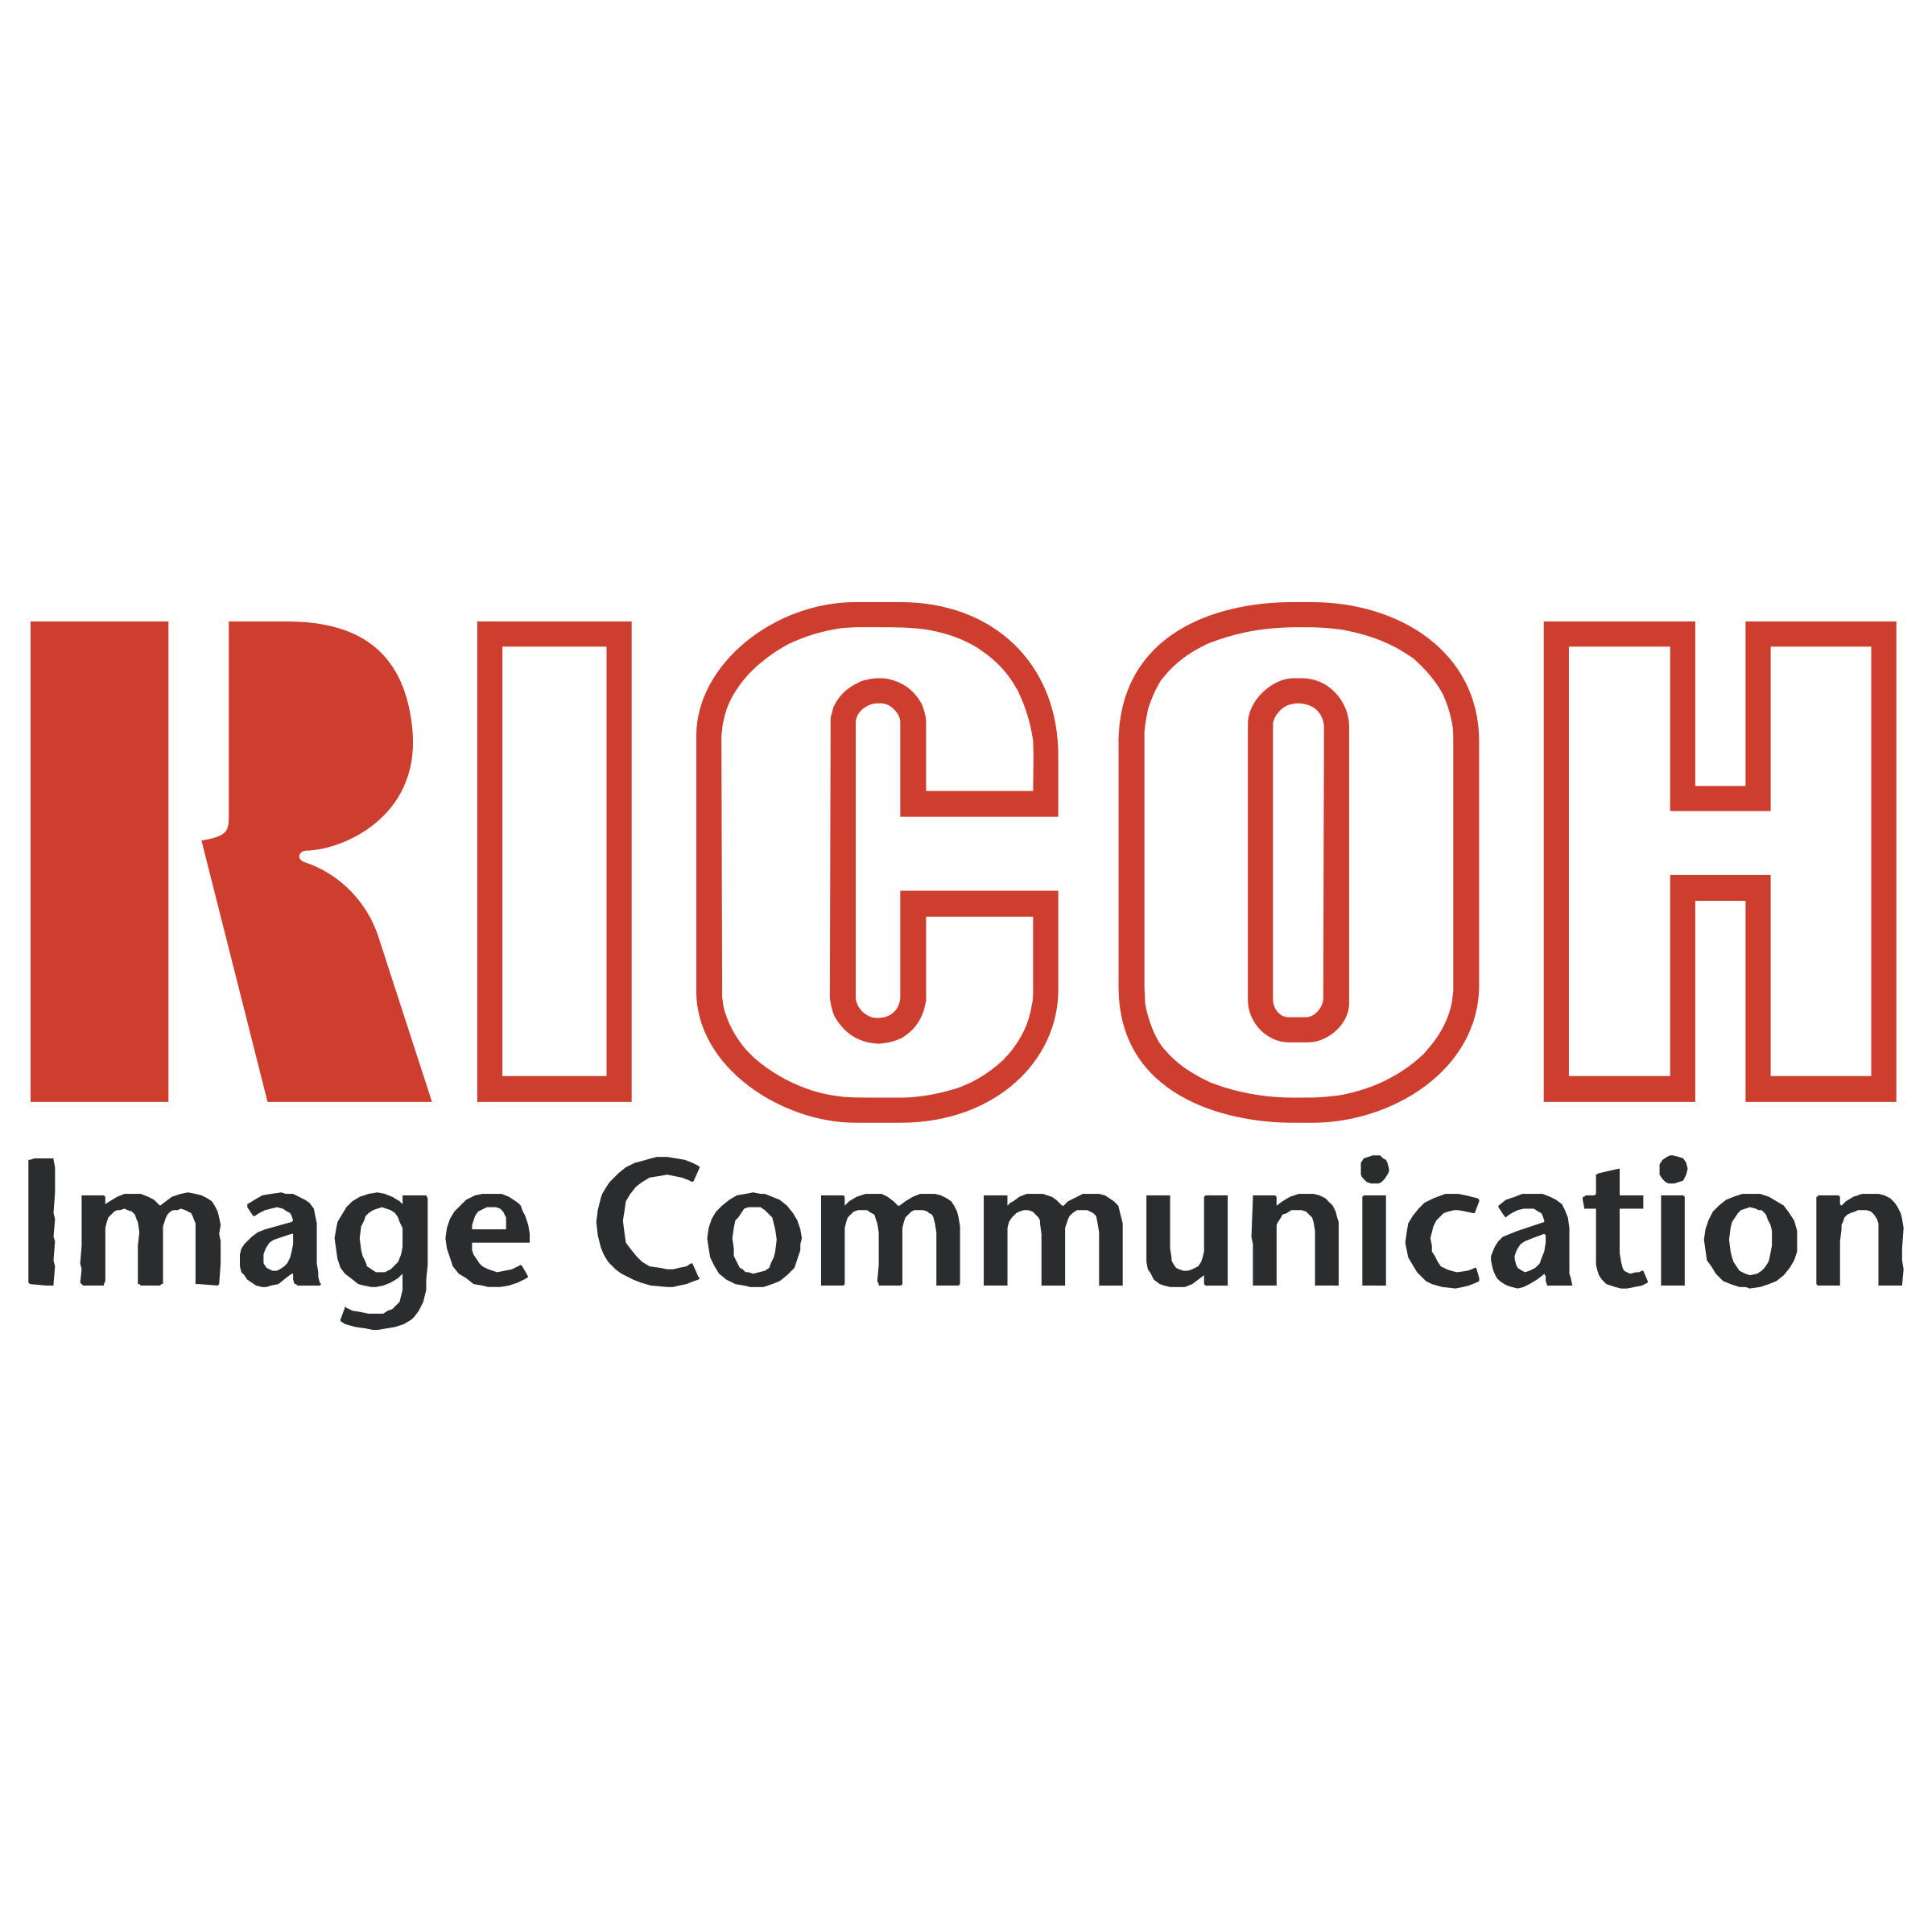 Ricoh Logo - Ricoh Logo PNG Transparent & SVG Vector - Freebie Supply